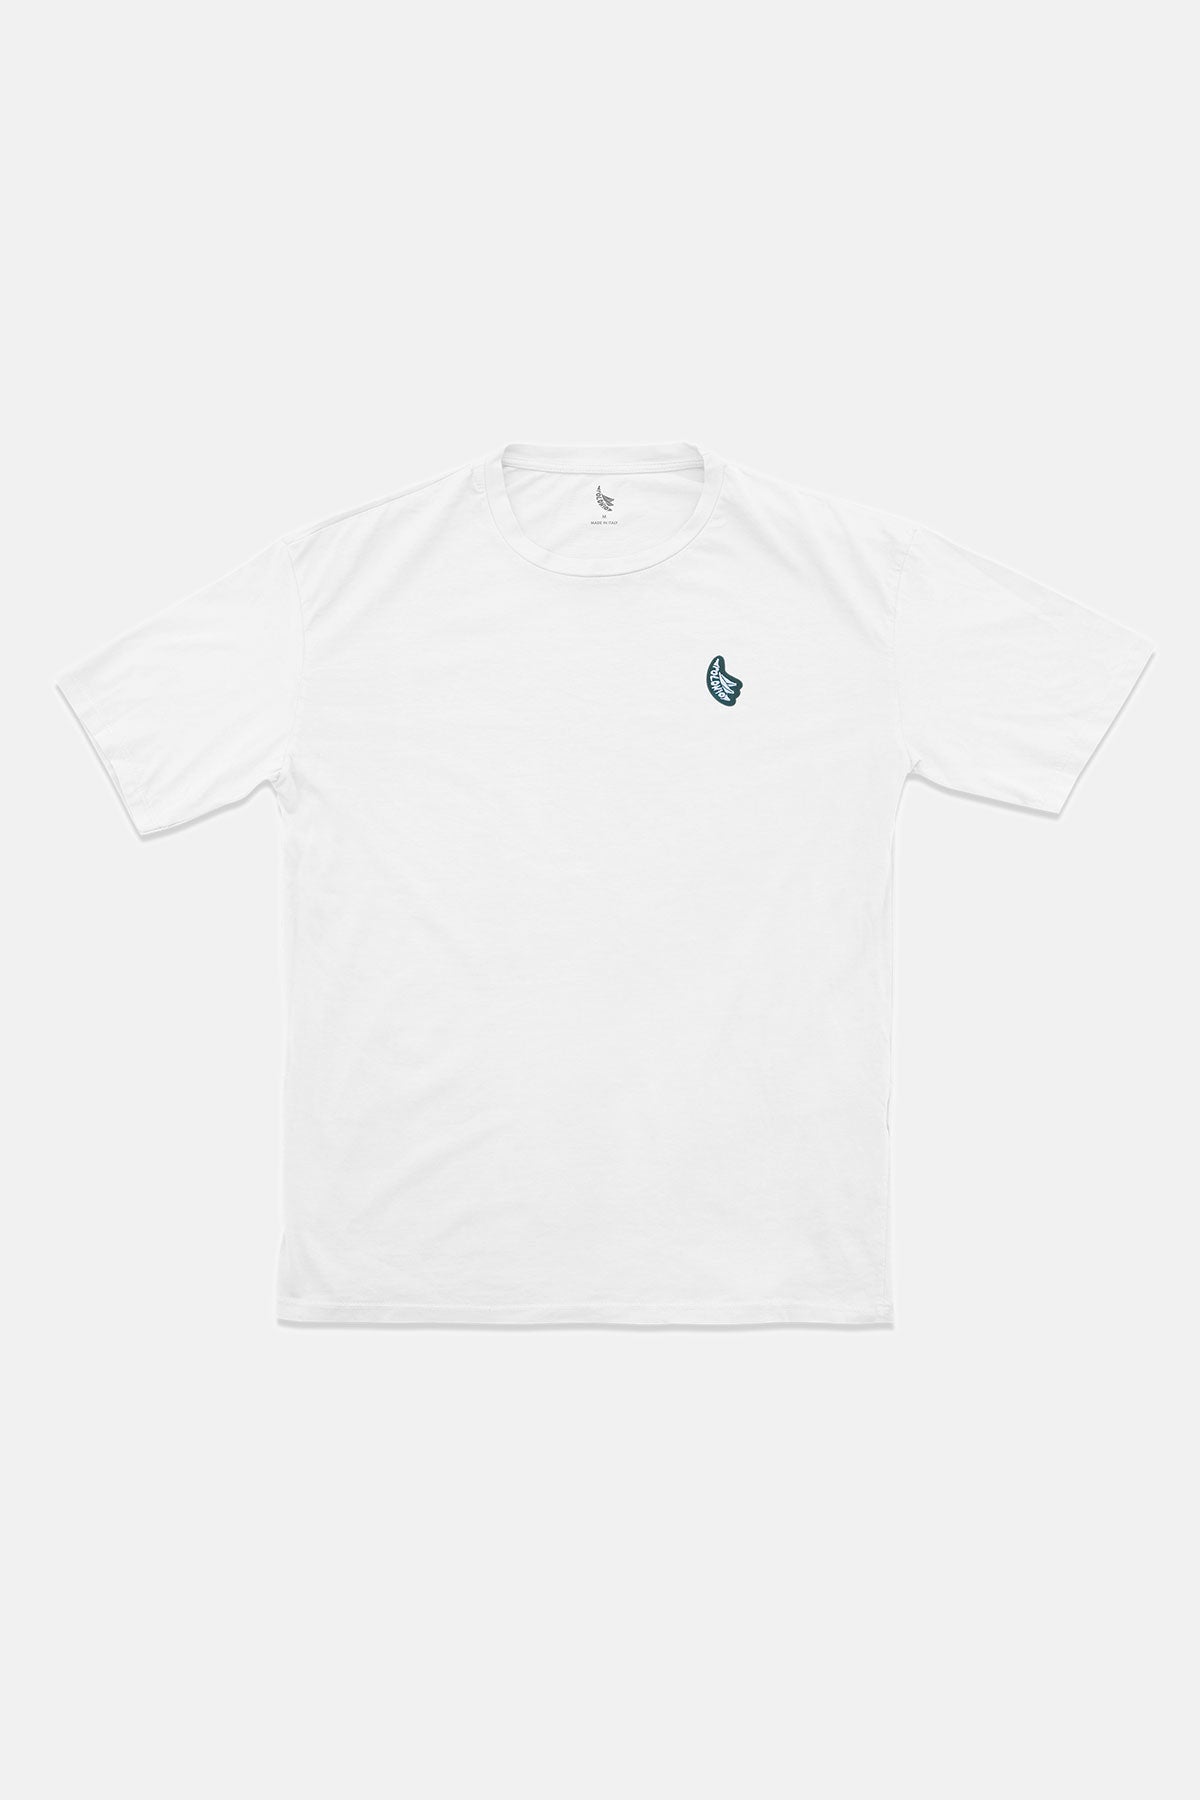 Blanco T-Shirt Algodón Polonio